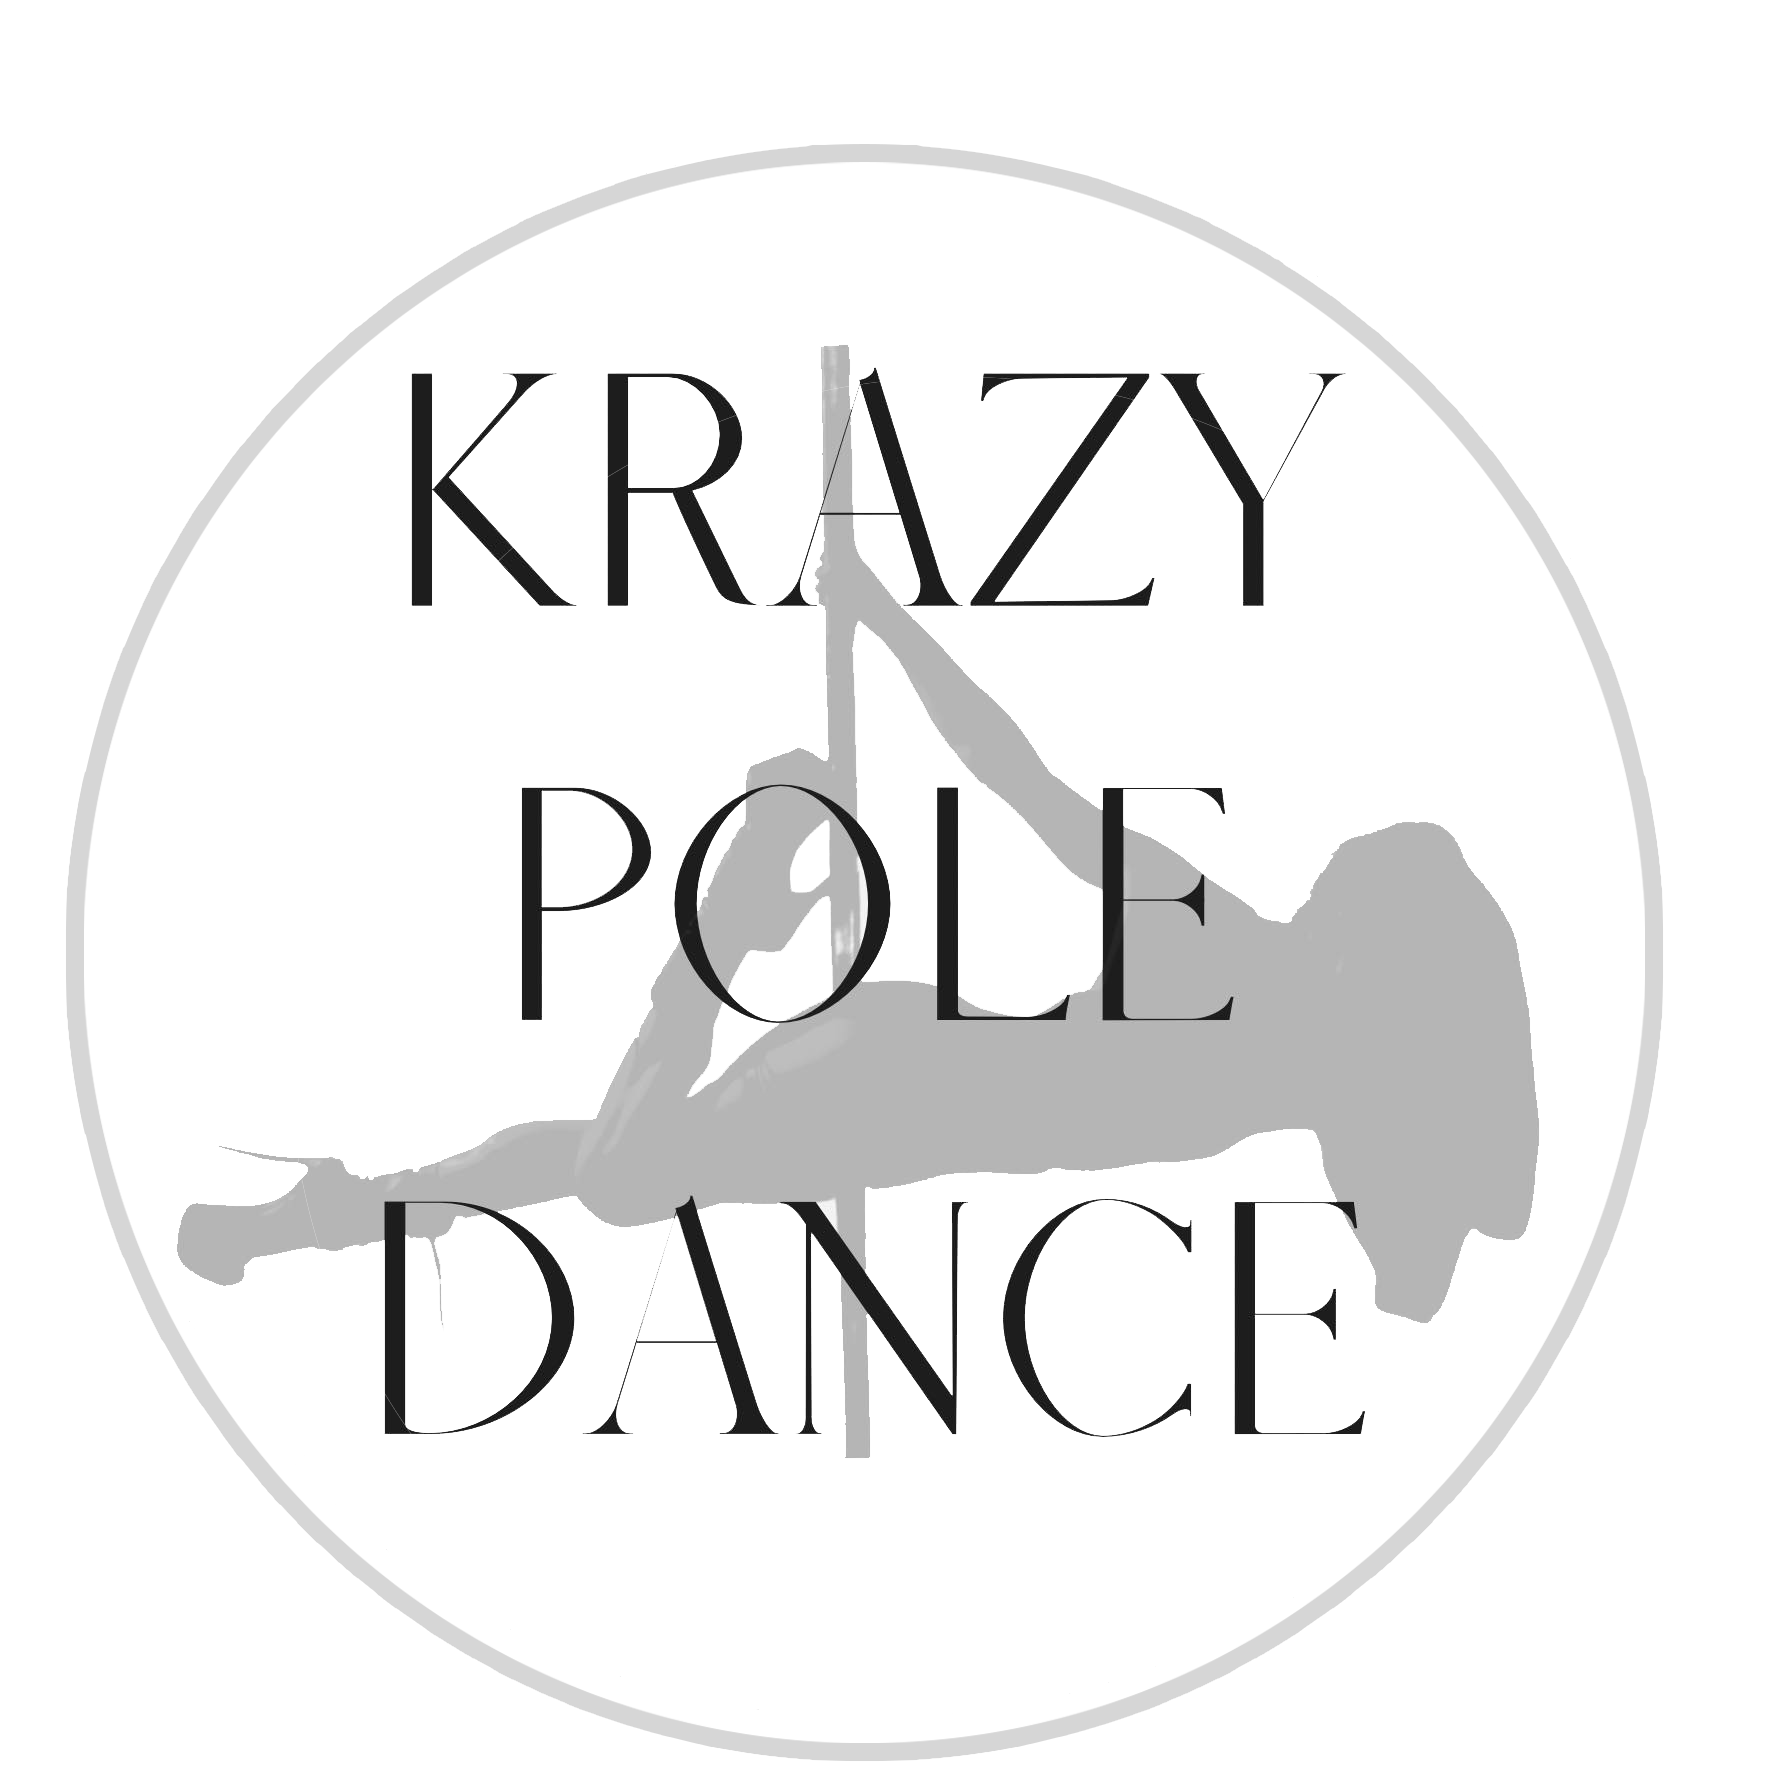 krazy pole dance logo